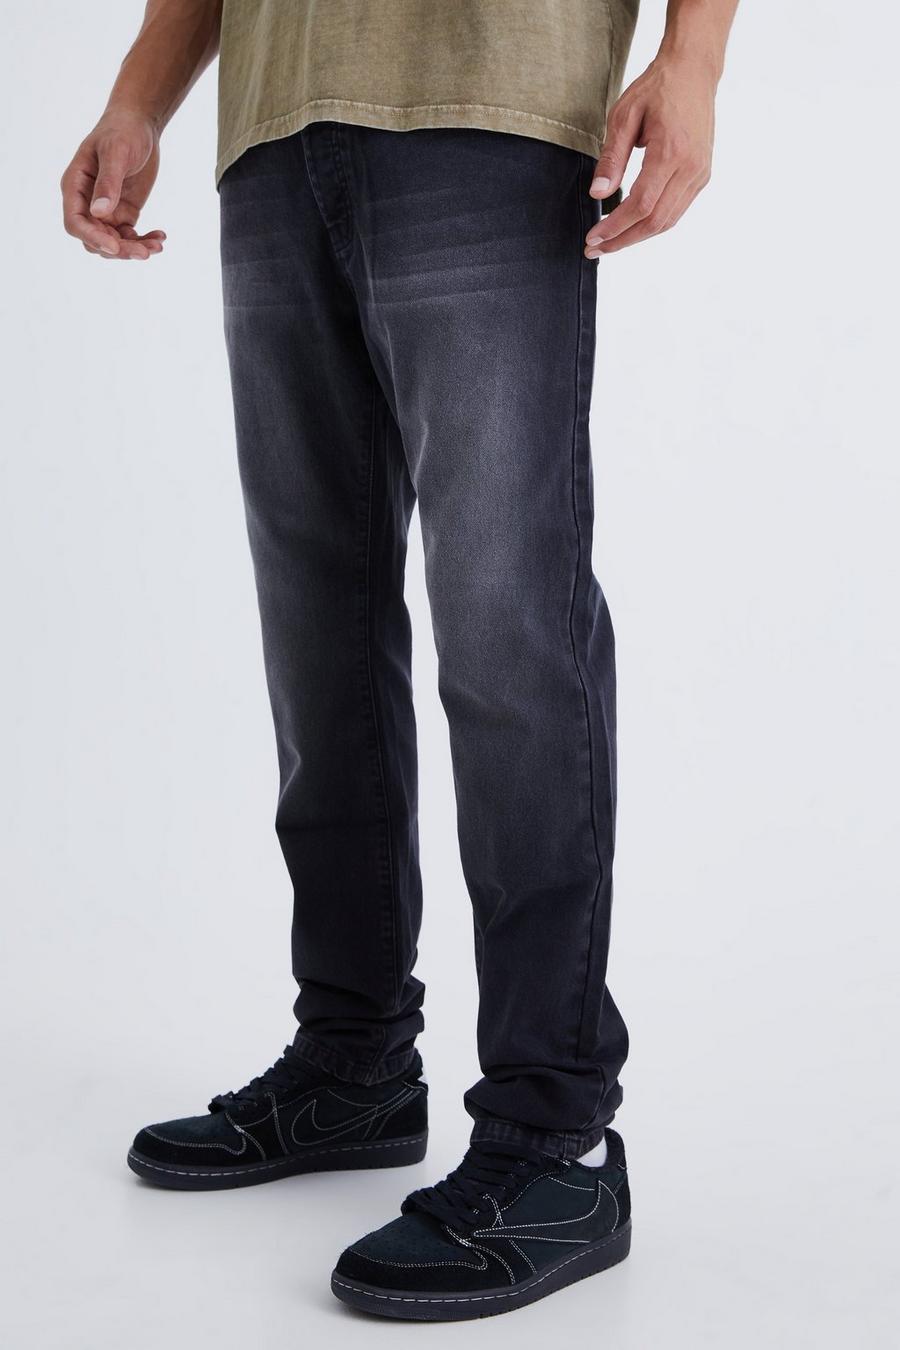 Jeans Tall Slim Fit in denim rigido, Washed black